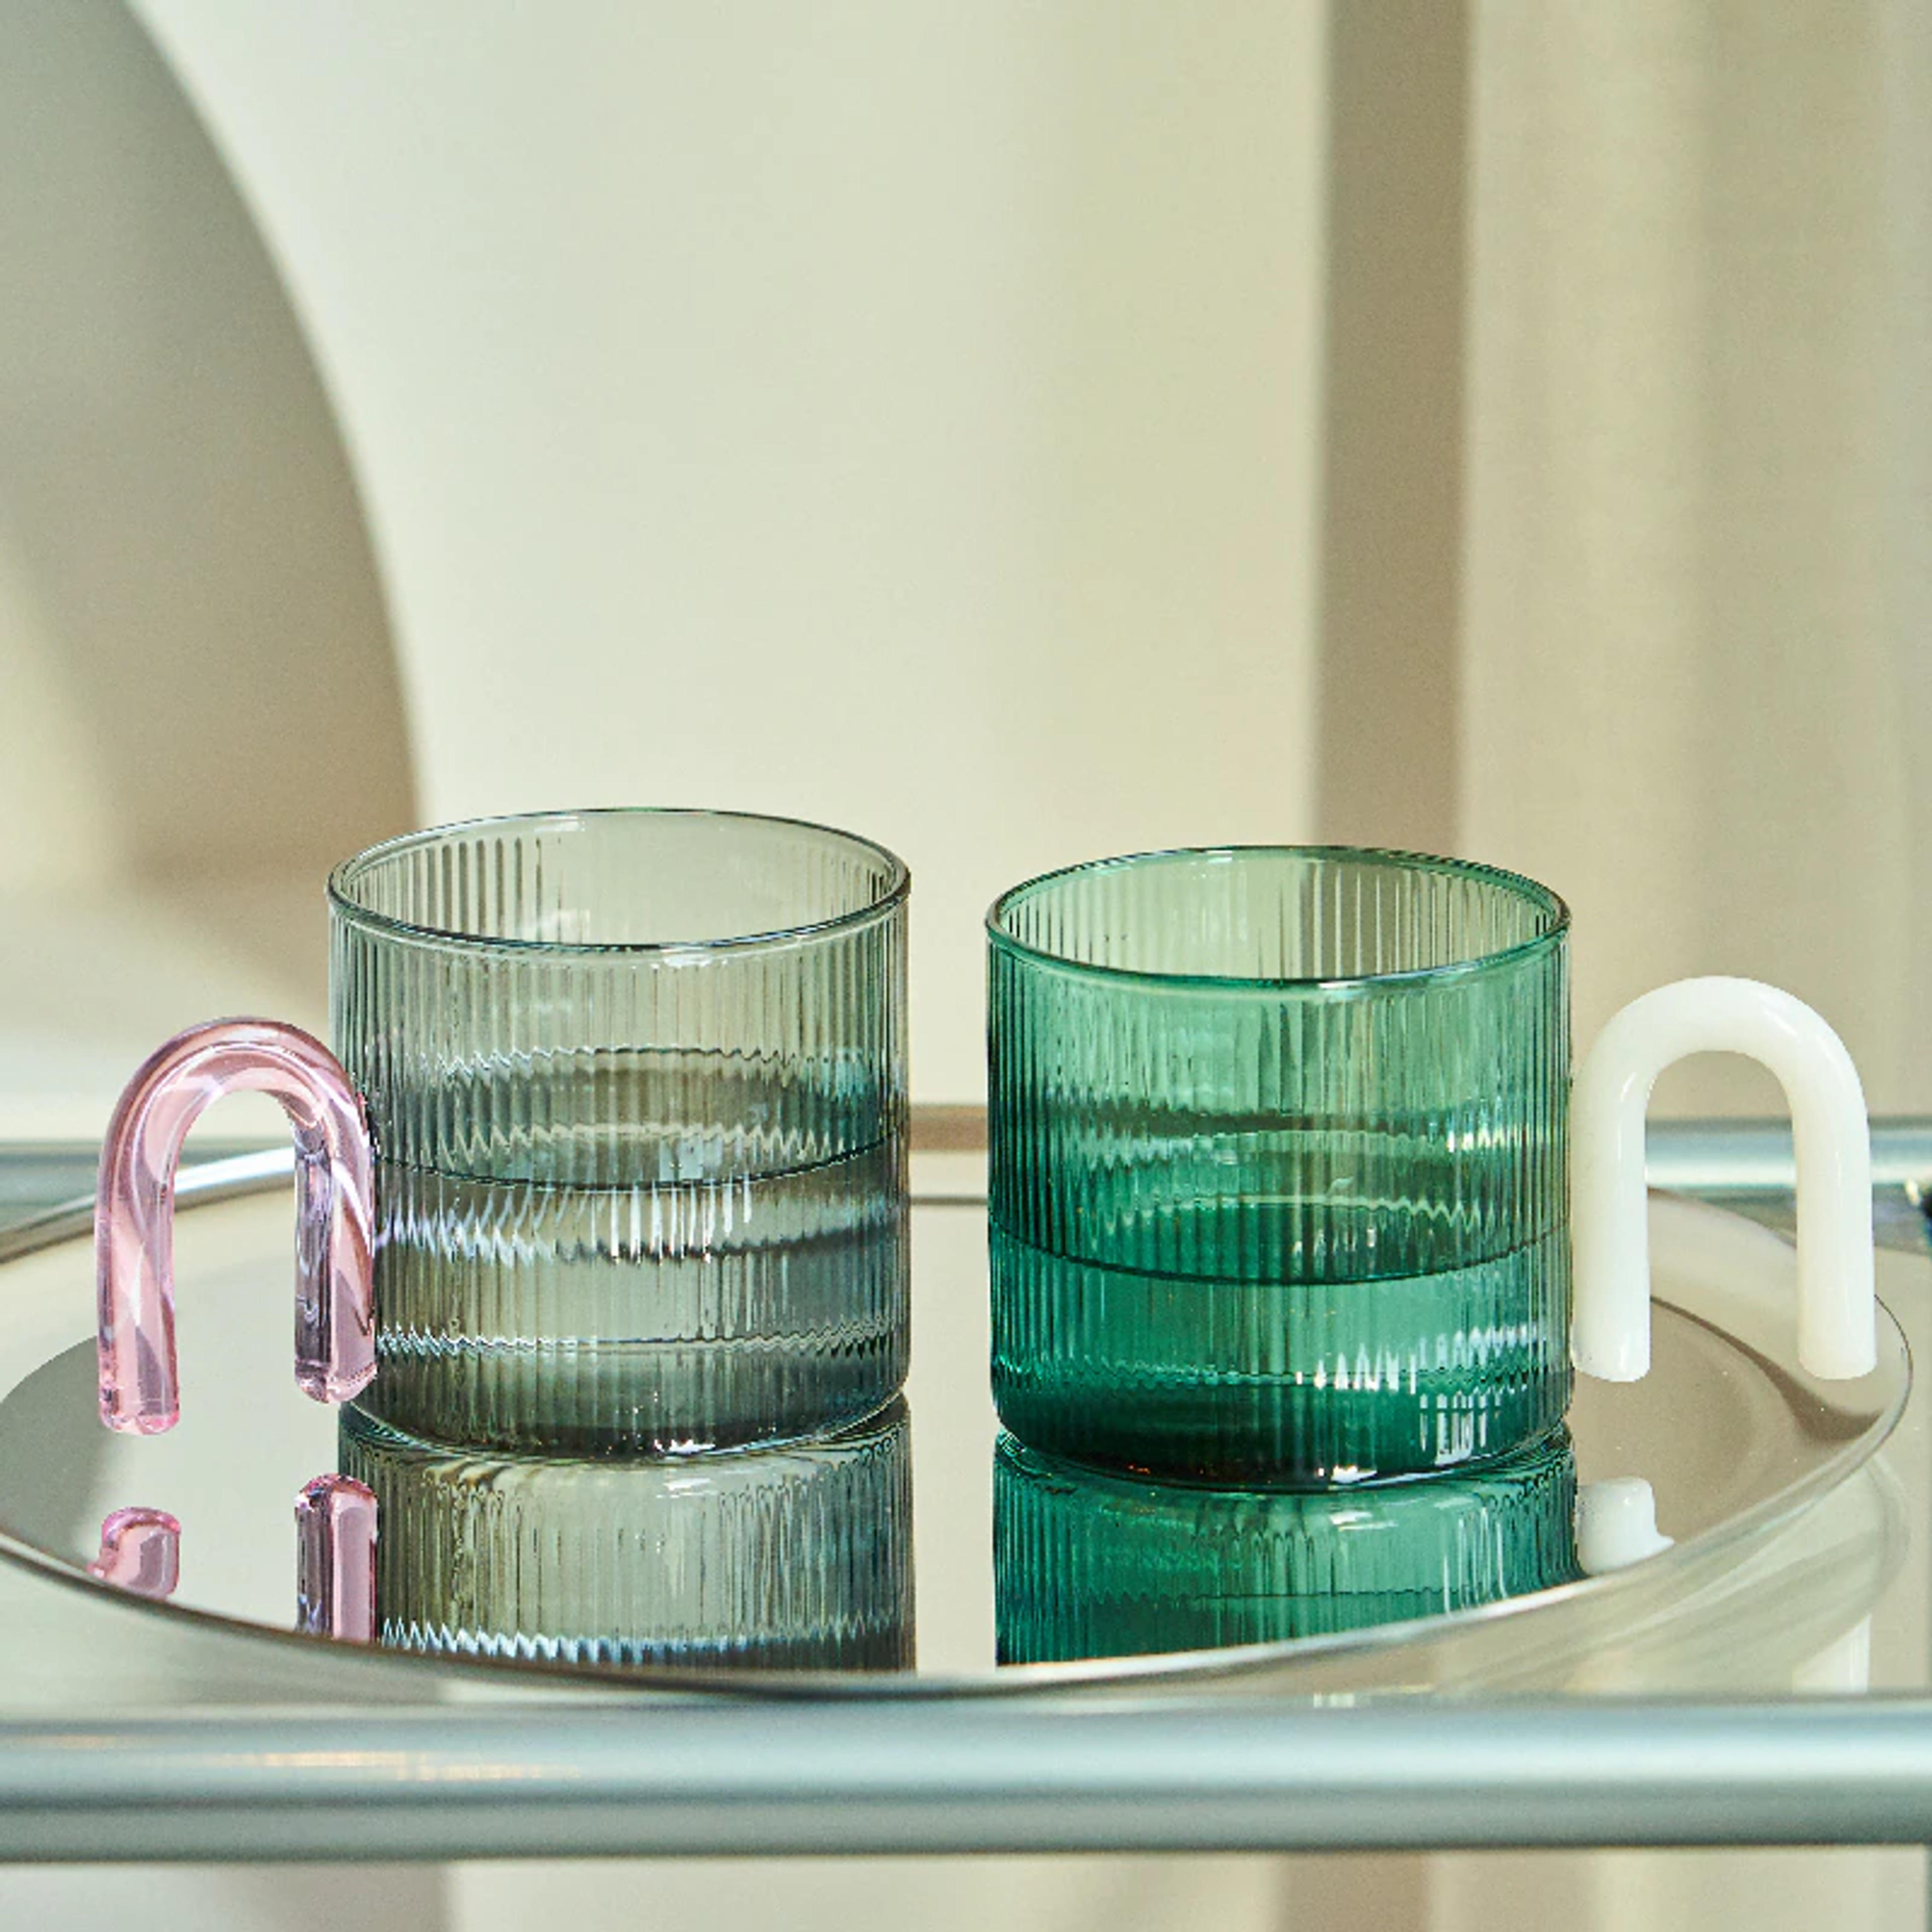 13.32US $ 46% OFF|Colorful Handle Ripple Coffee Cup Heat Resistance Glass Mug Milk Tea Office Cups Drinkware Birthday Gift Coffee Mugs - Glass - AliExpress